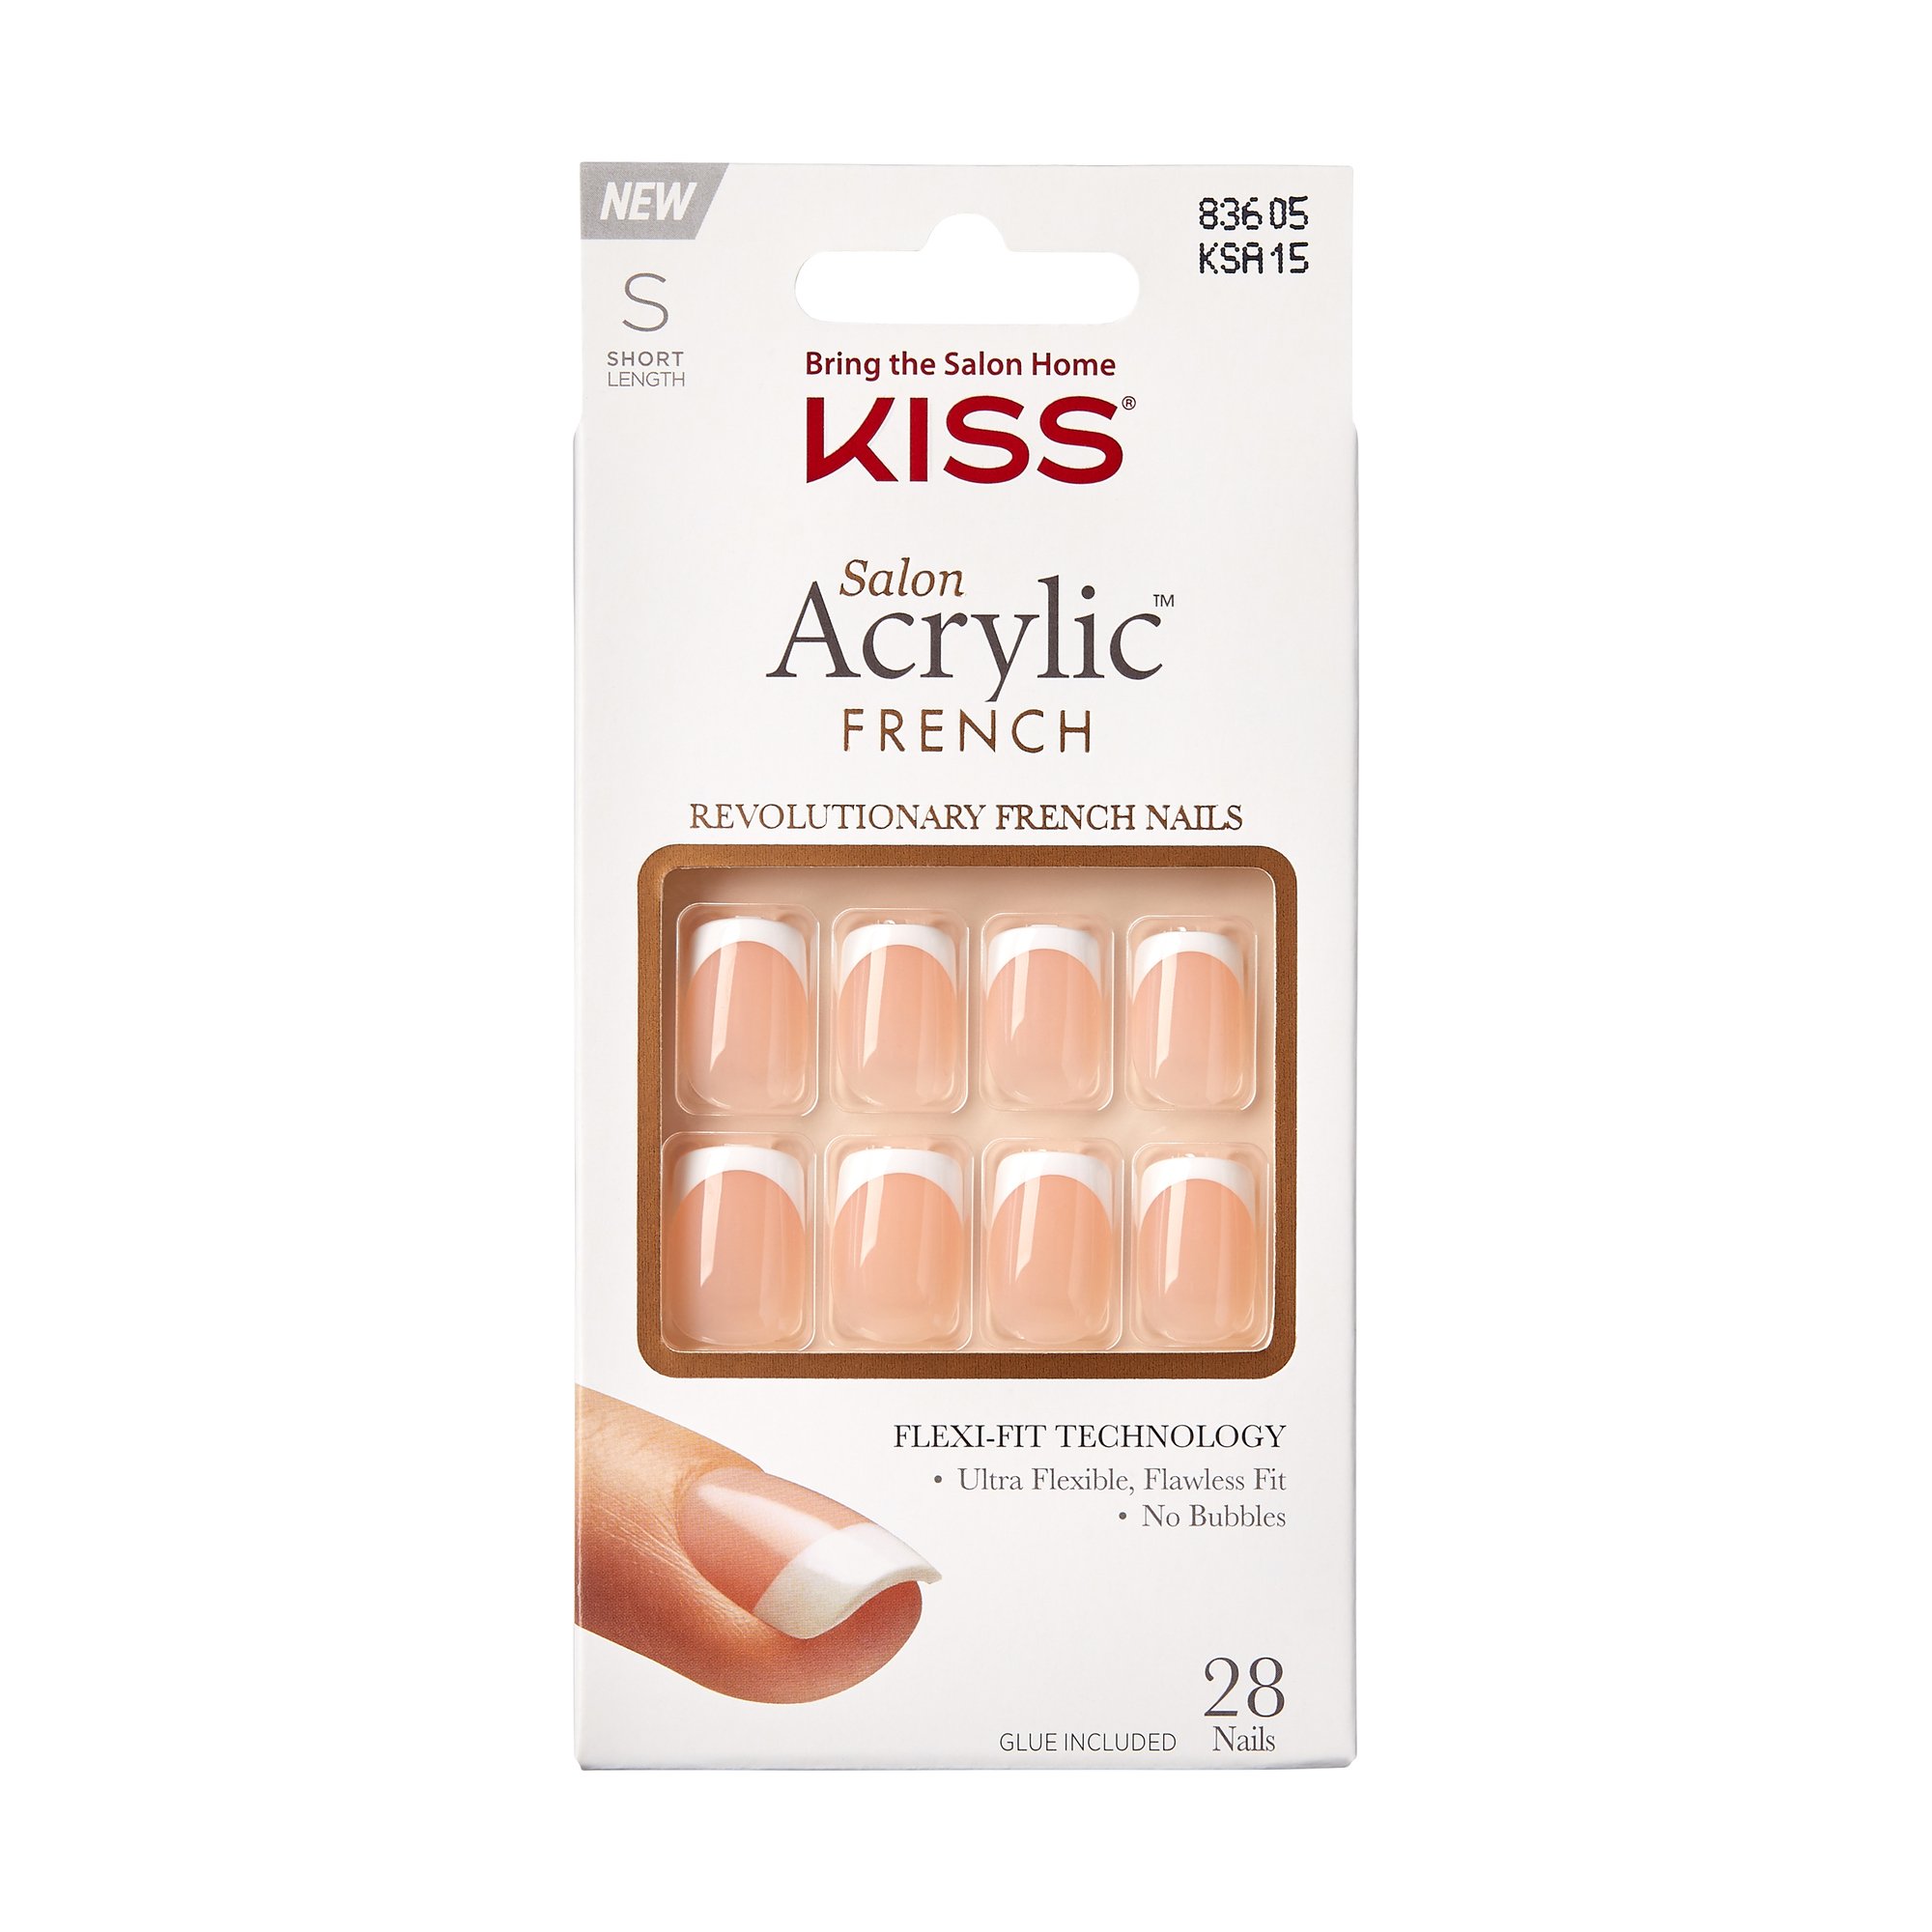 KISS Salon Acrylic French Nail Kit - Bonjour - Shop Nail Sets at H-E-B